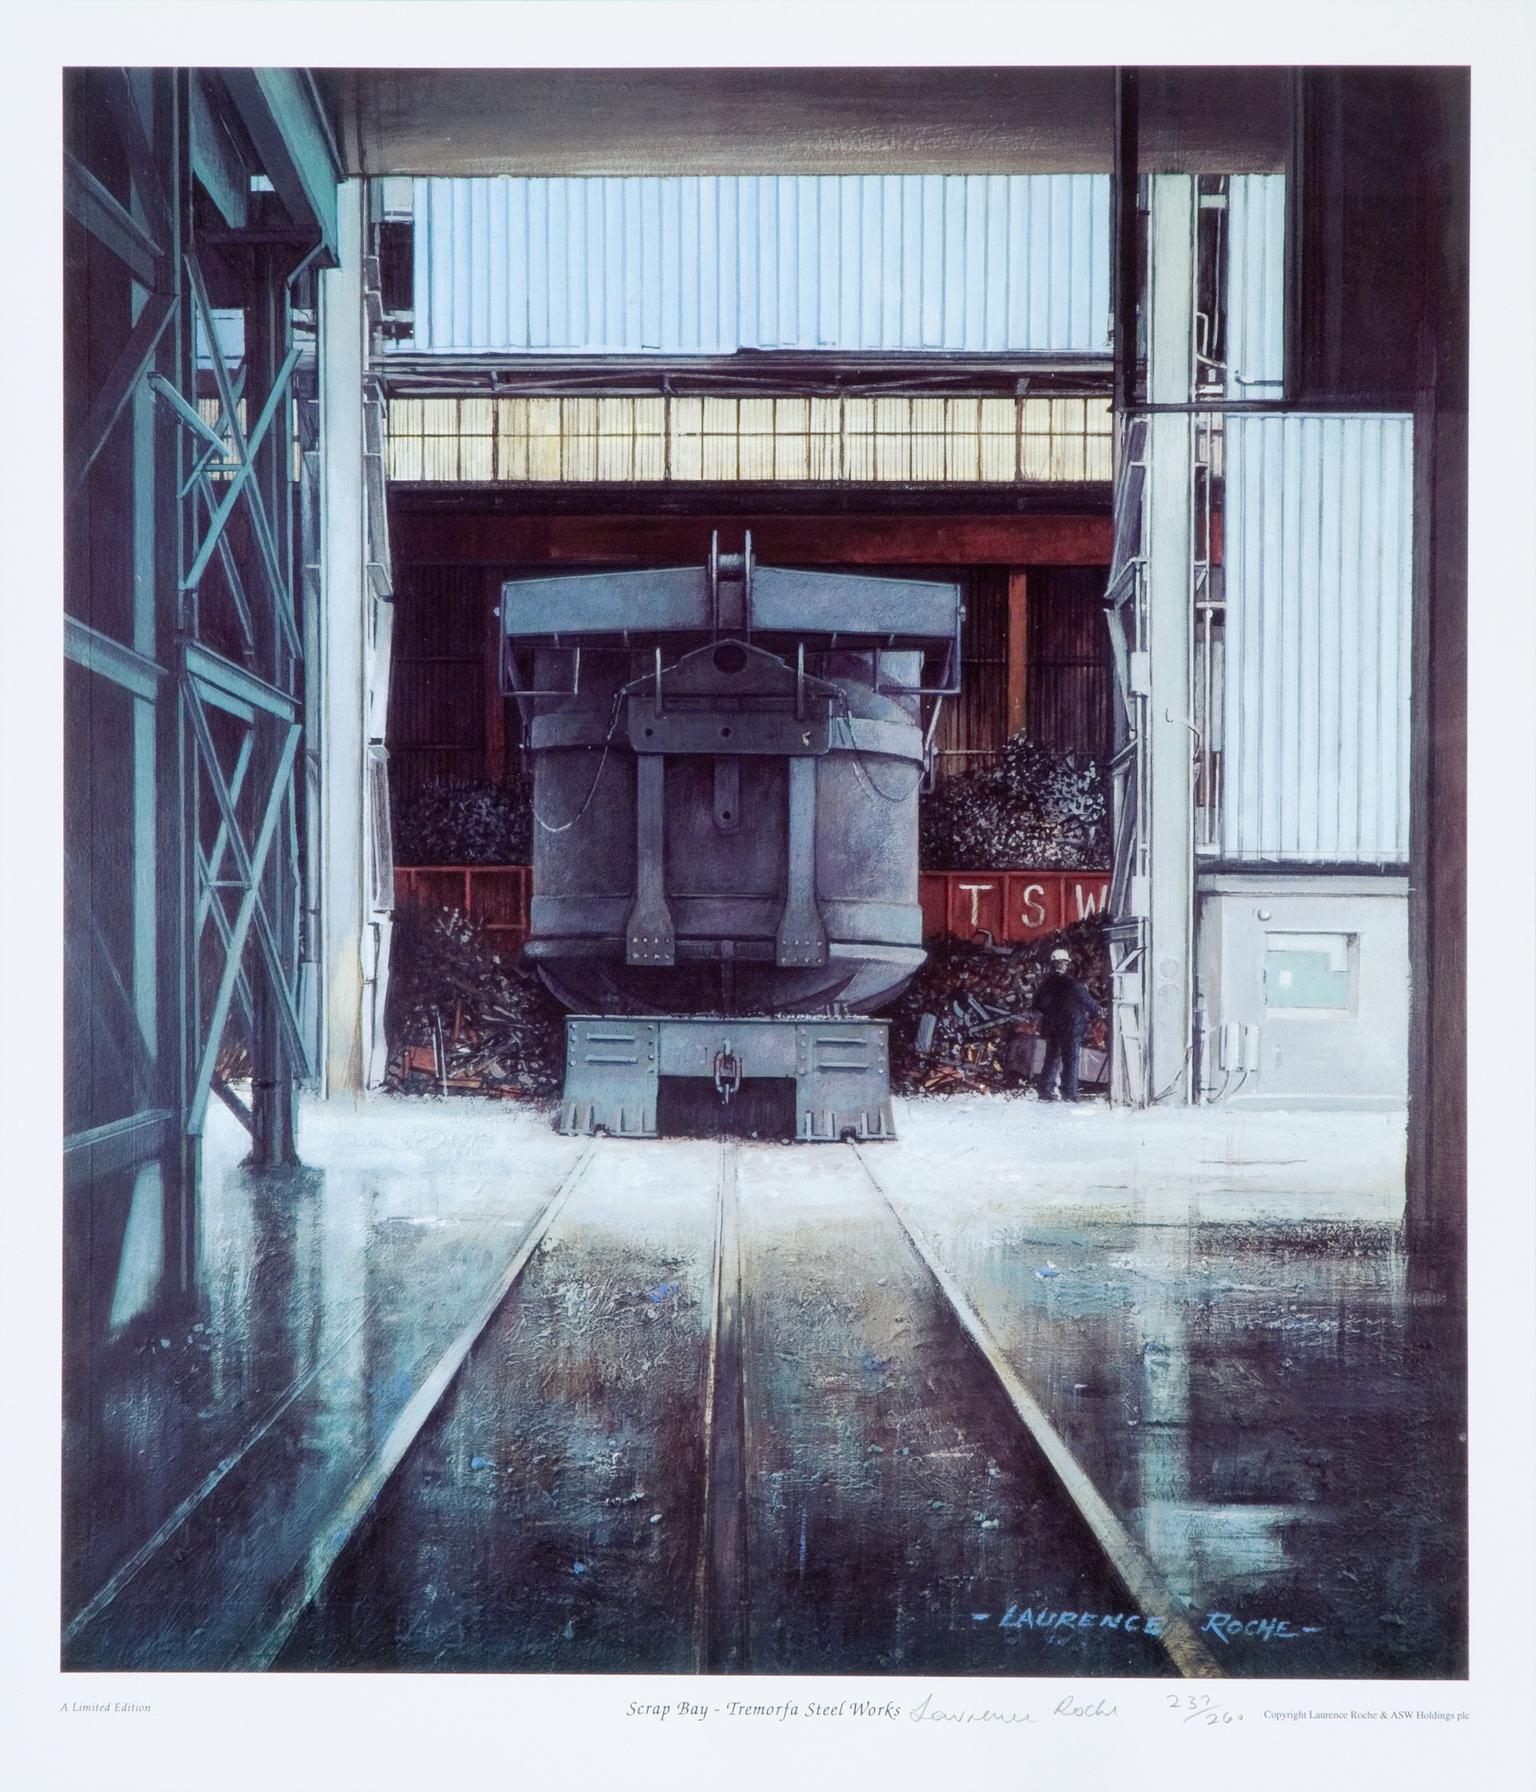 Scrap Bay - Tremorfa Steel Works (print)